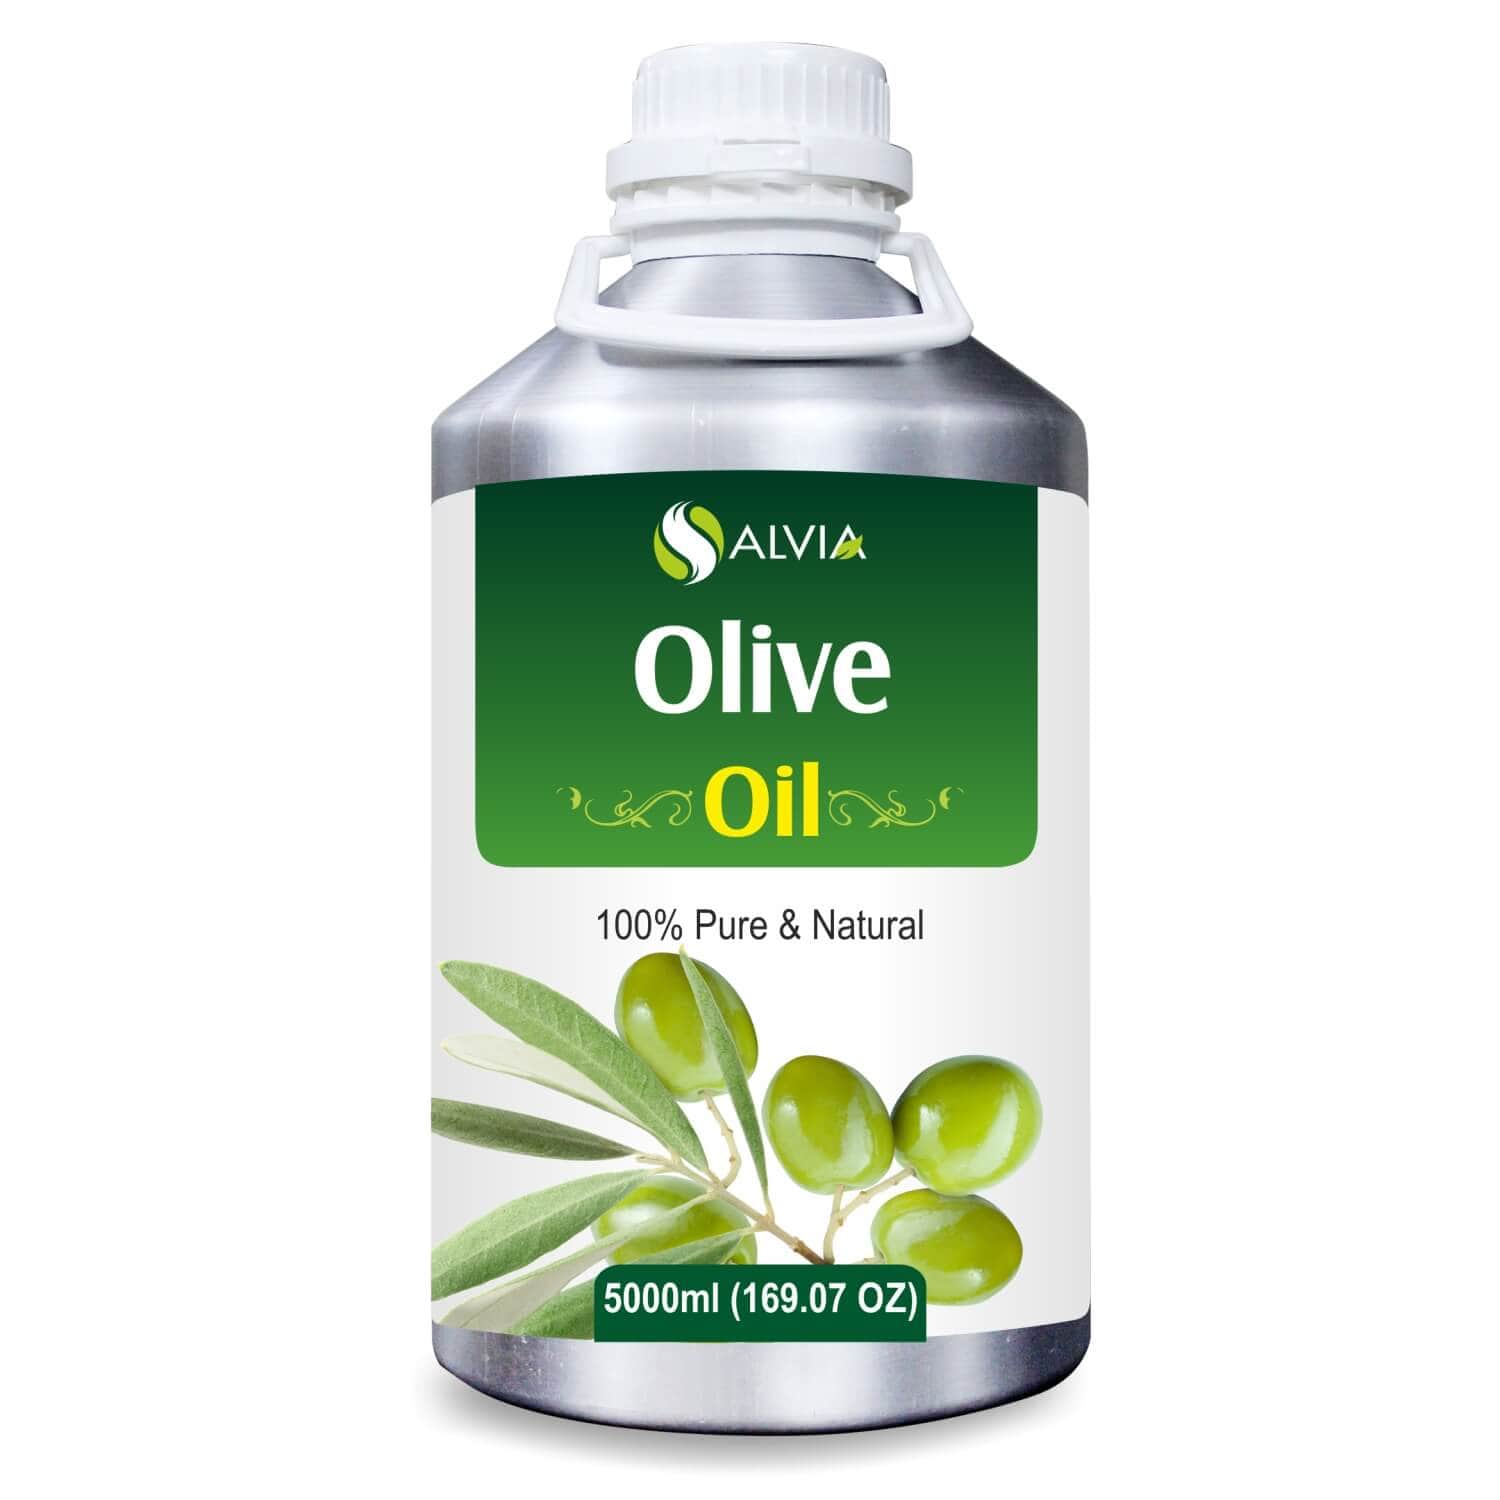 Salvia Natural Carrier Oils 5000ml Olive Oil